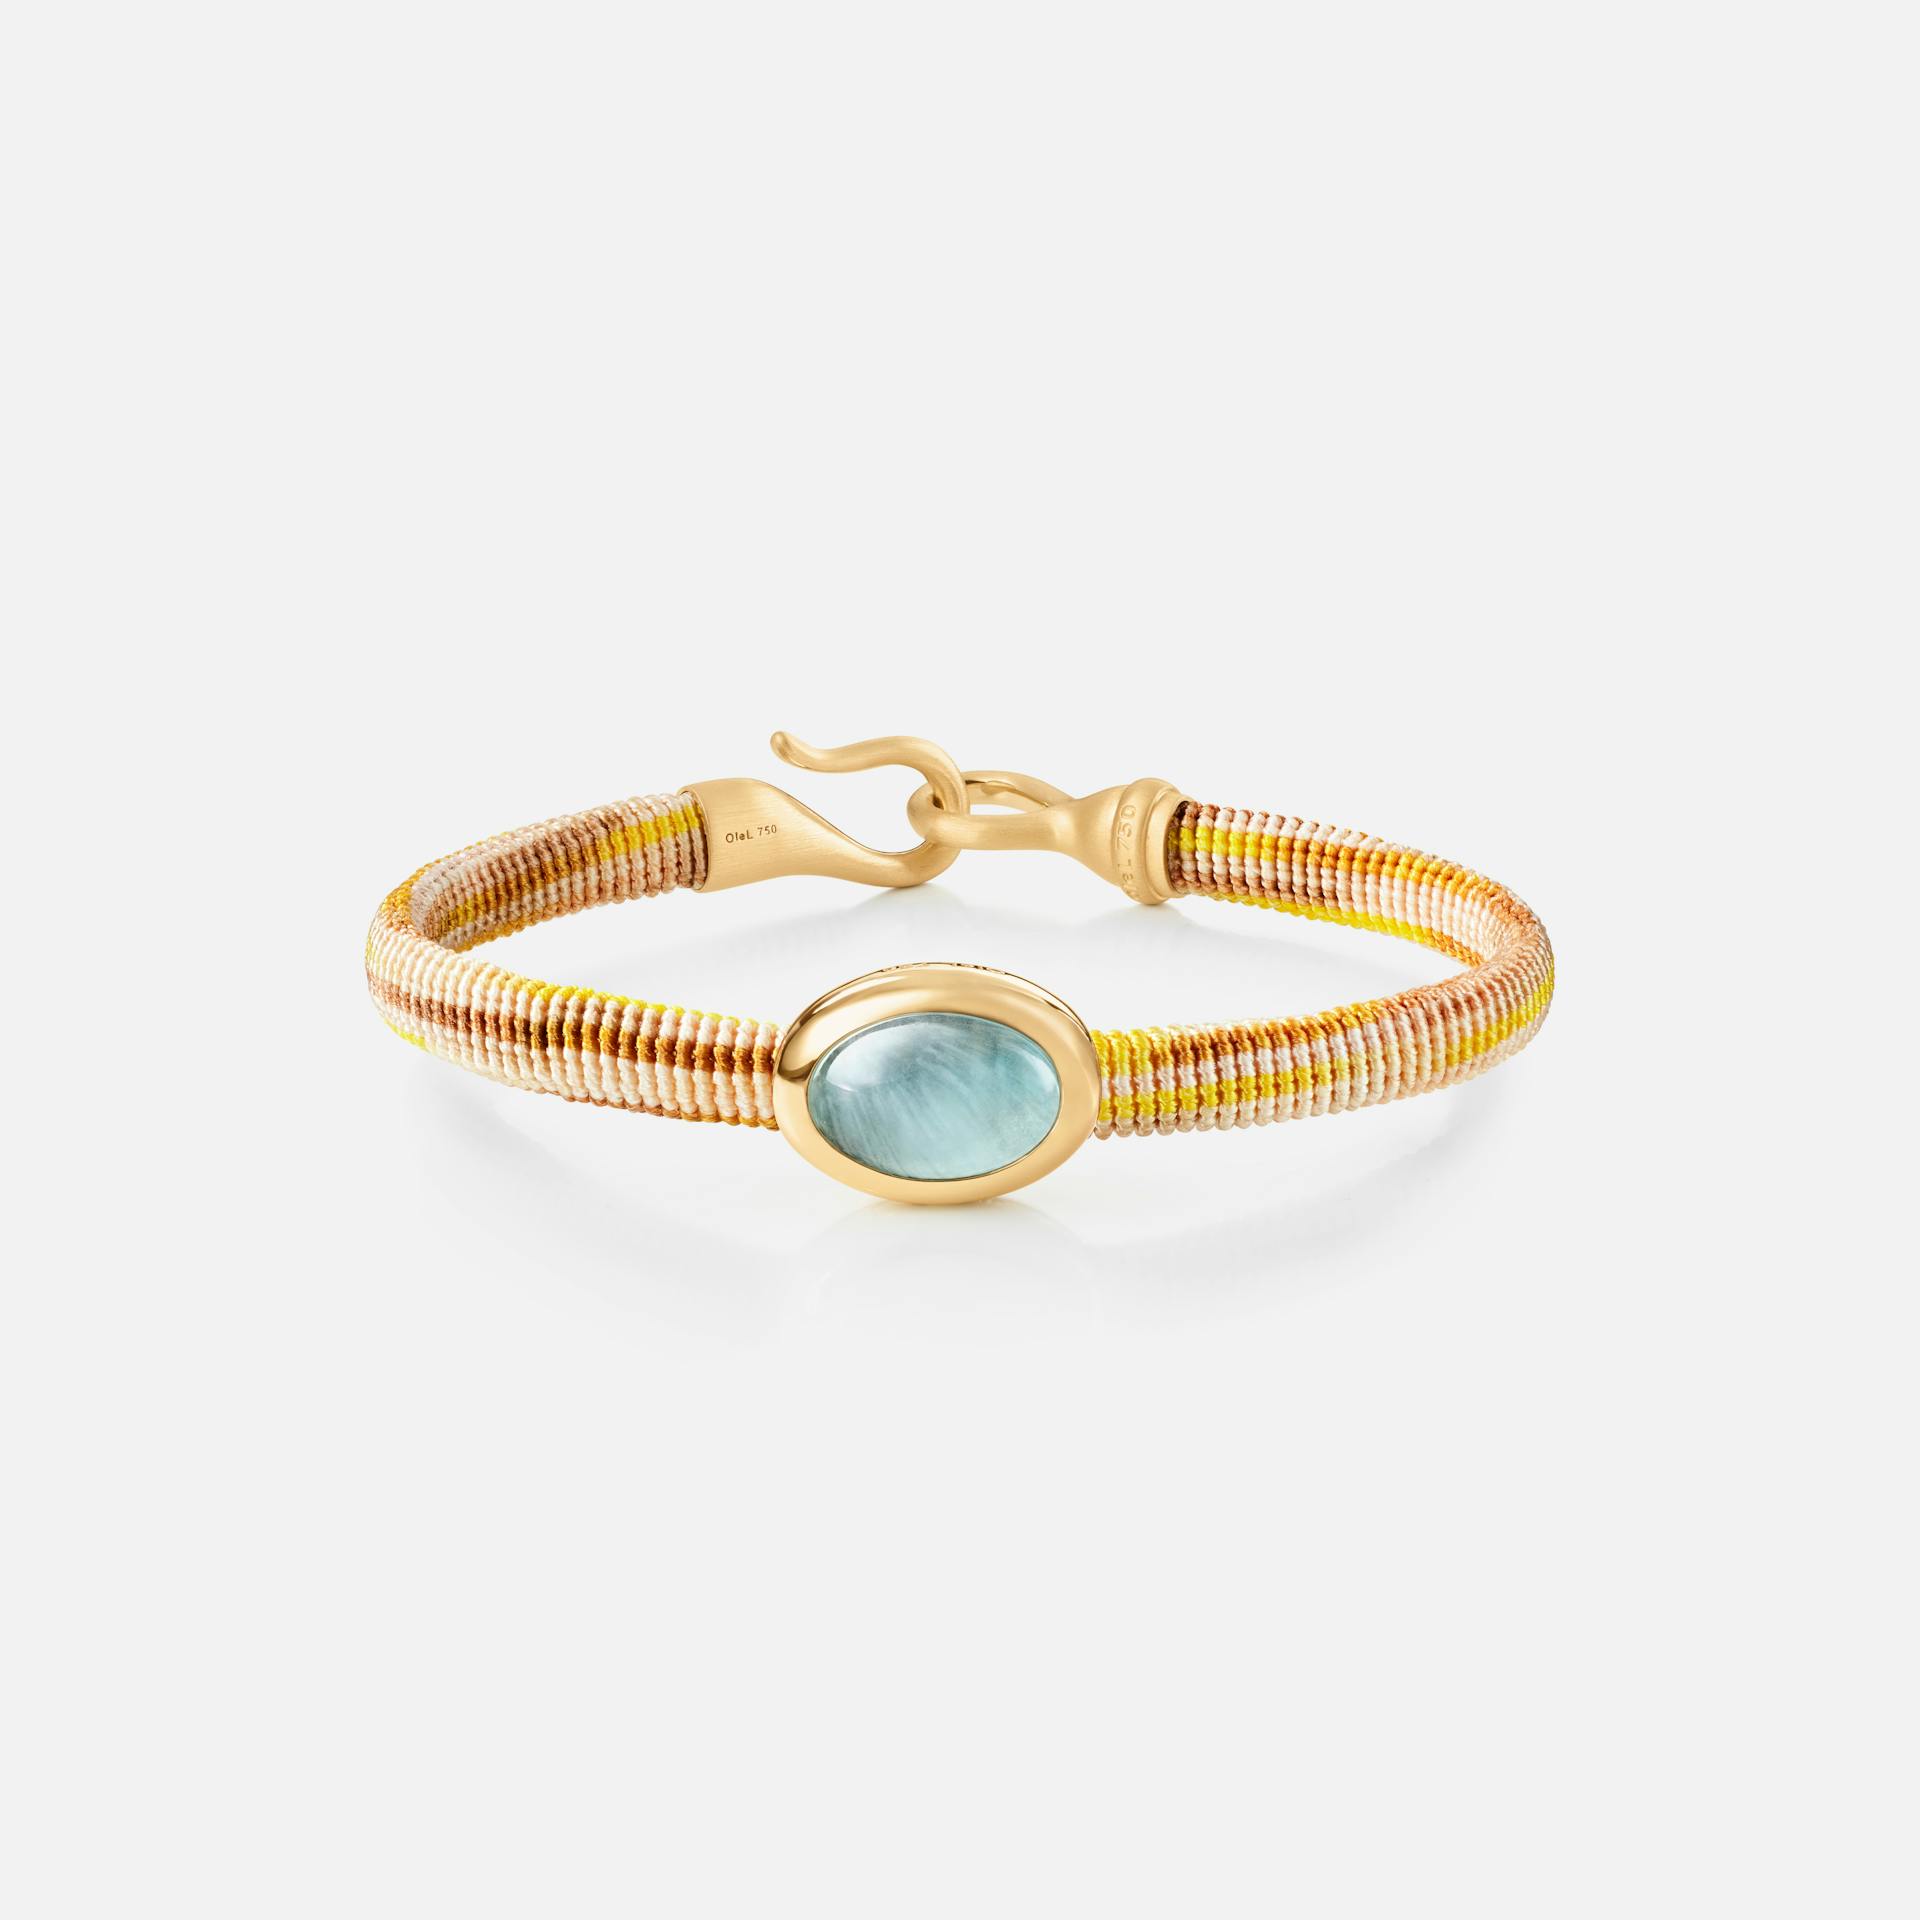 Life Bracelet with aquamarine 6 mm 18k gold and aquamarine with Golden rope